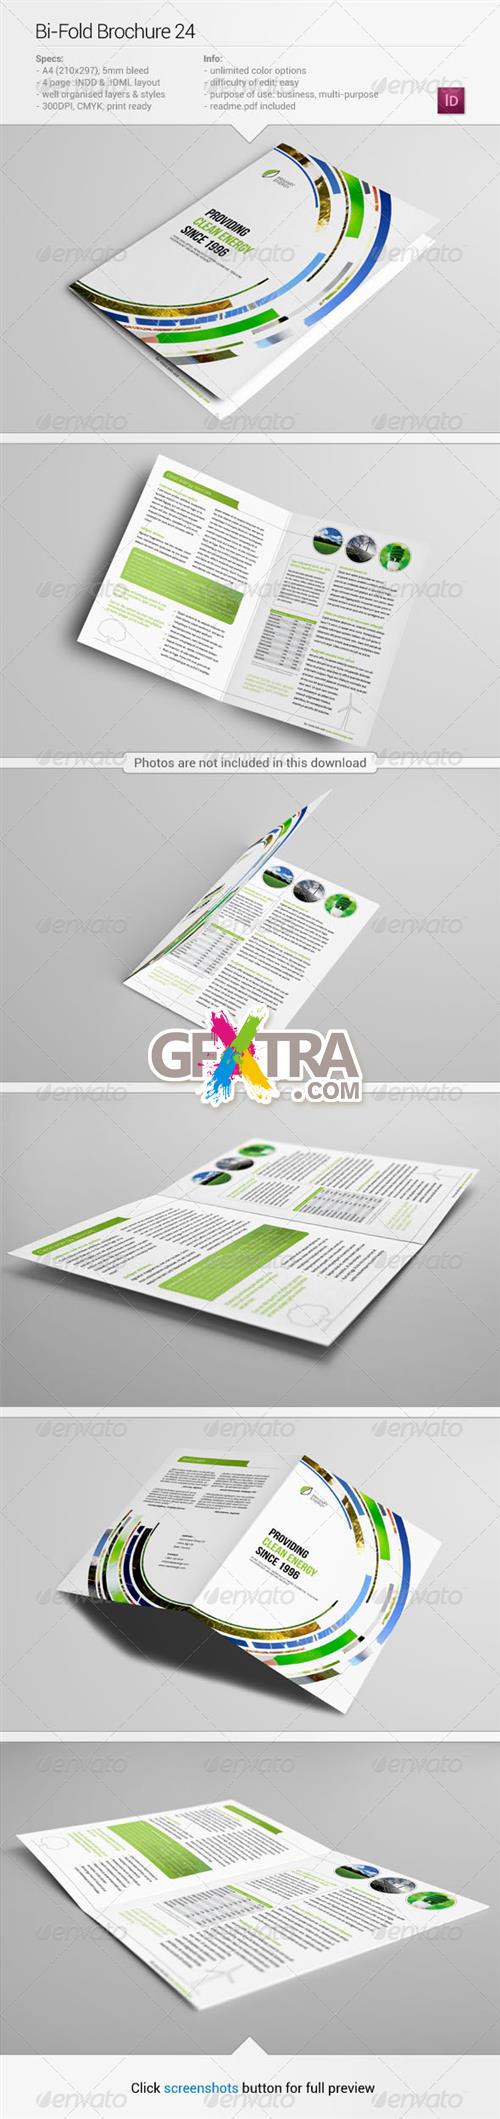 GraphicRiver - Bi-Fold Brochure 24